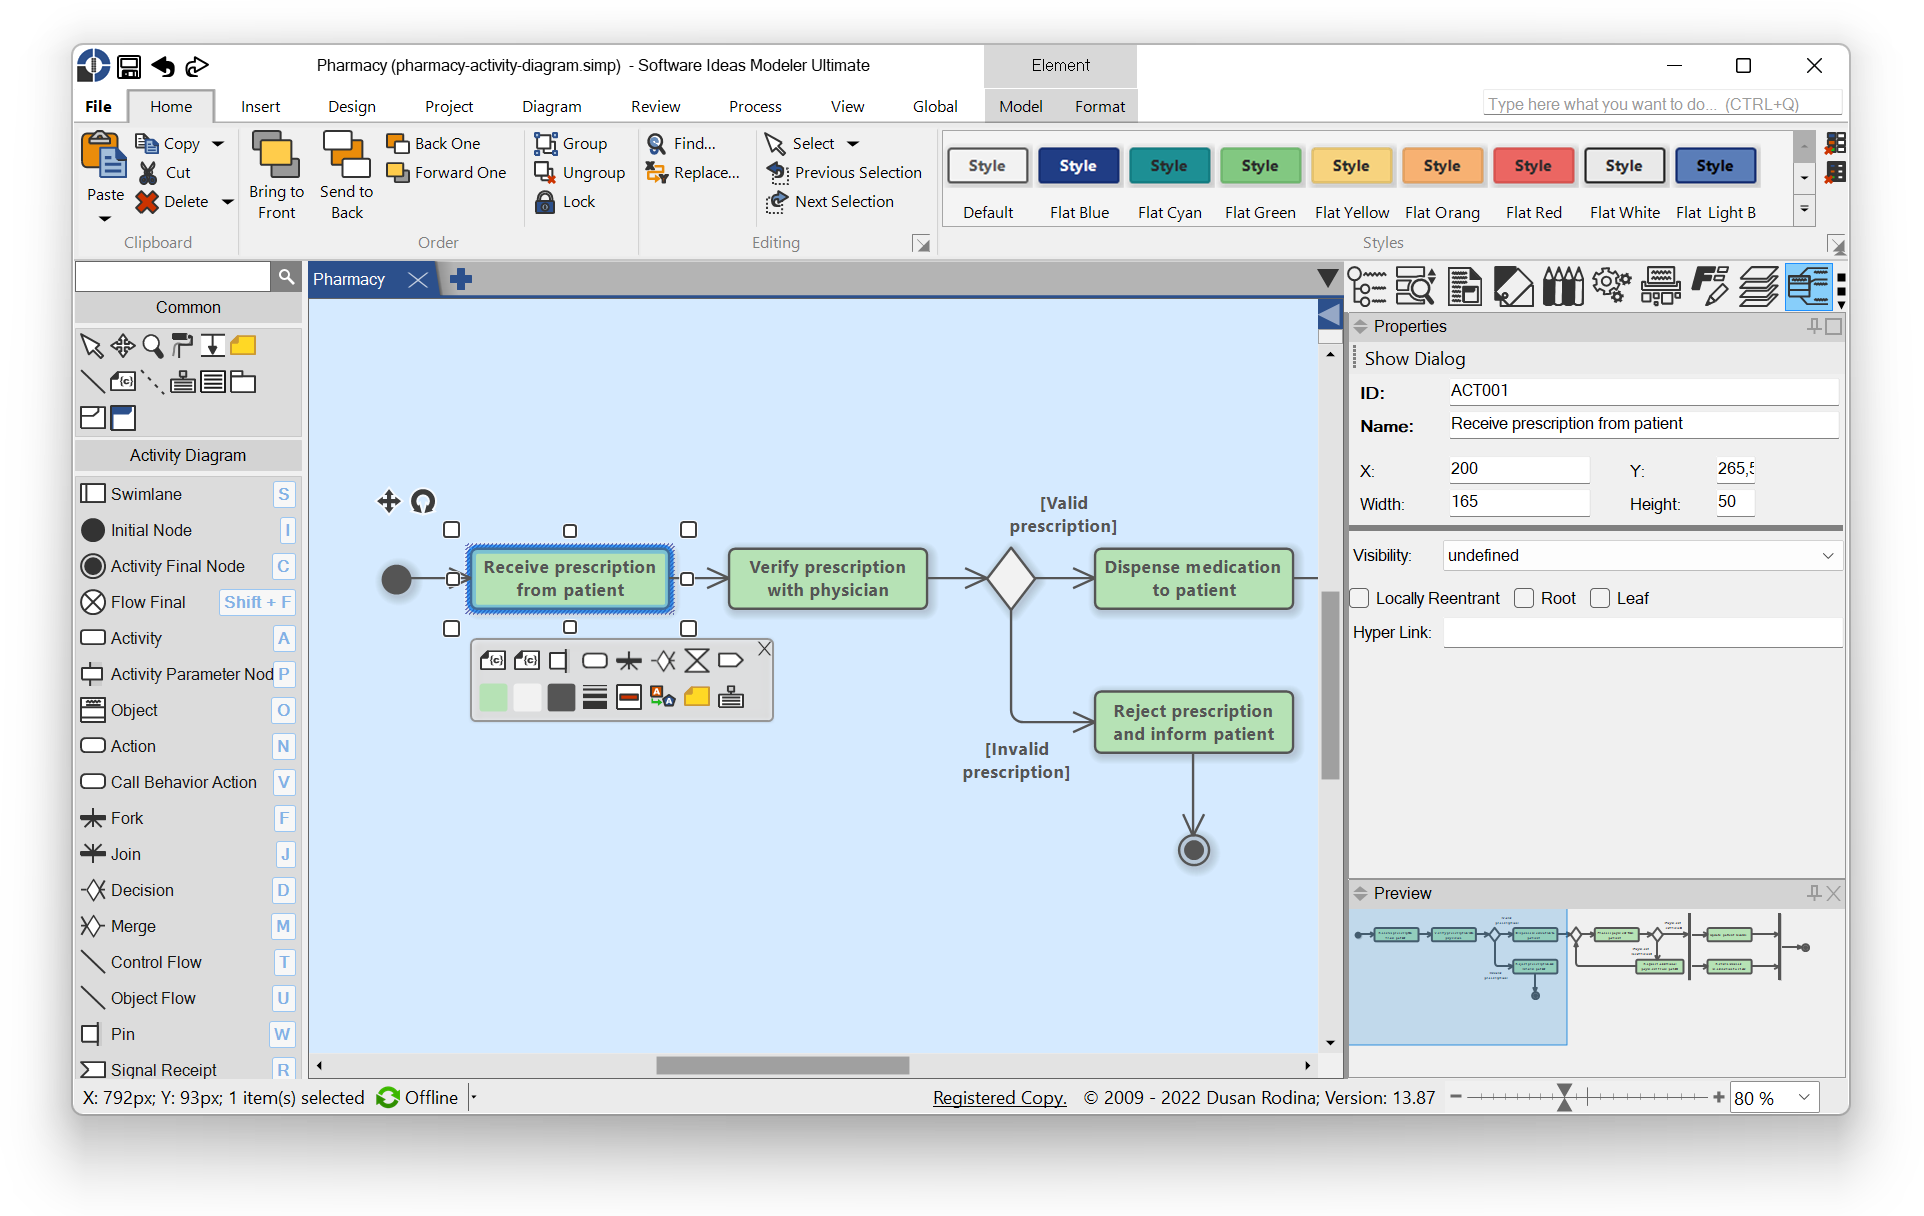 Improved Diagram Preview - Software Ideas Modeler 13.87